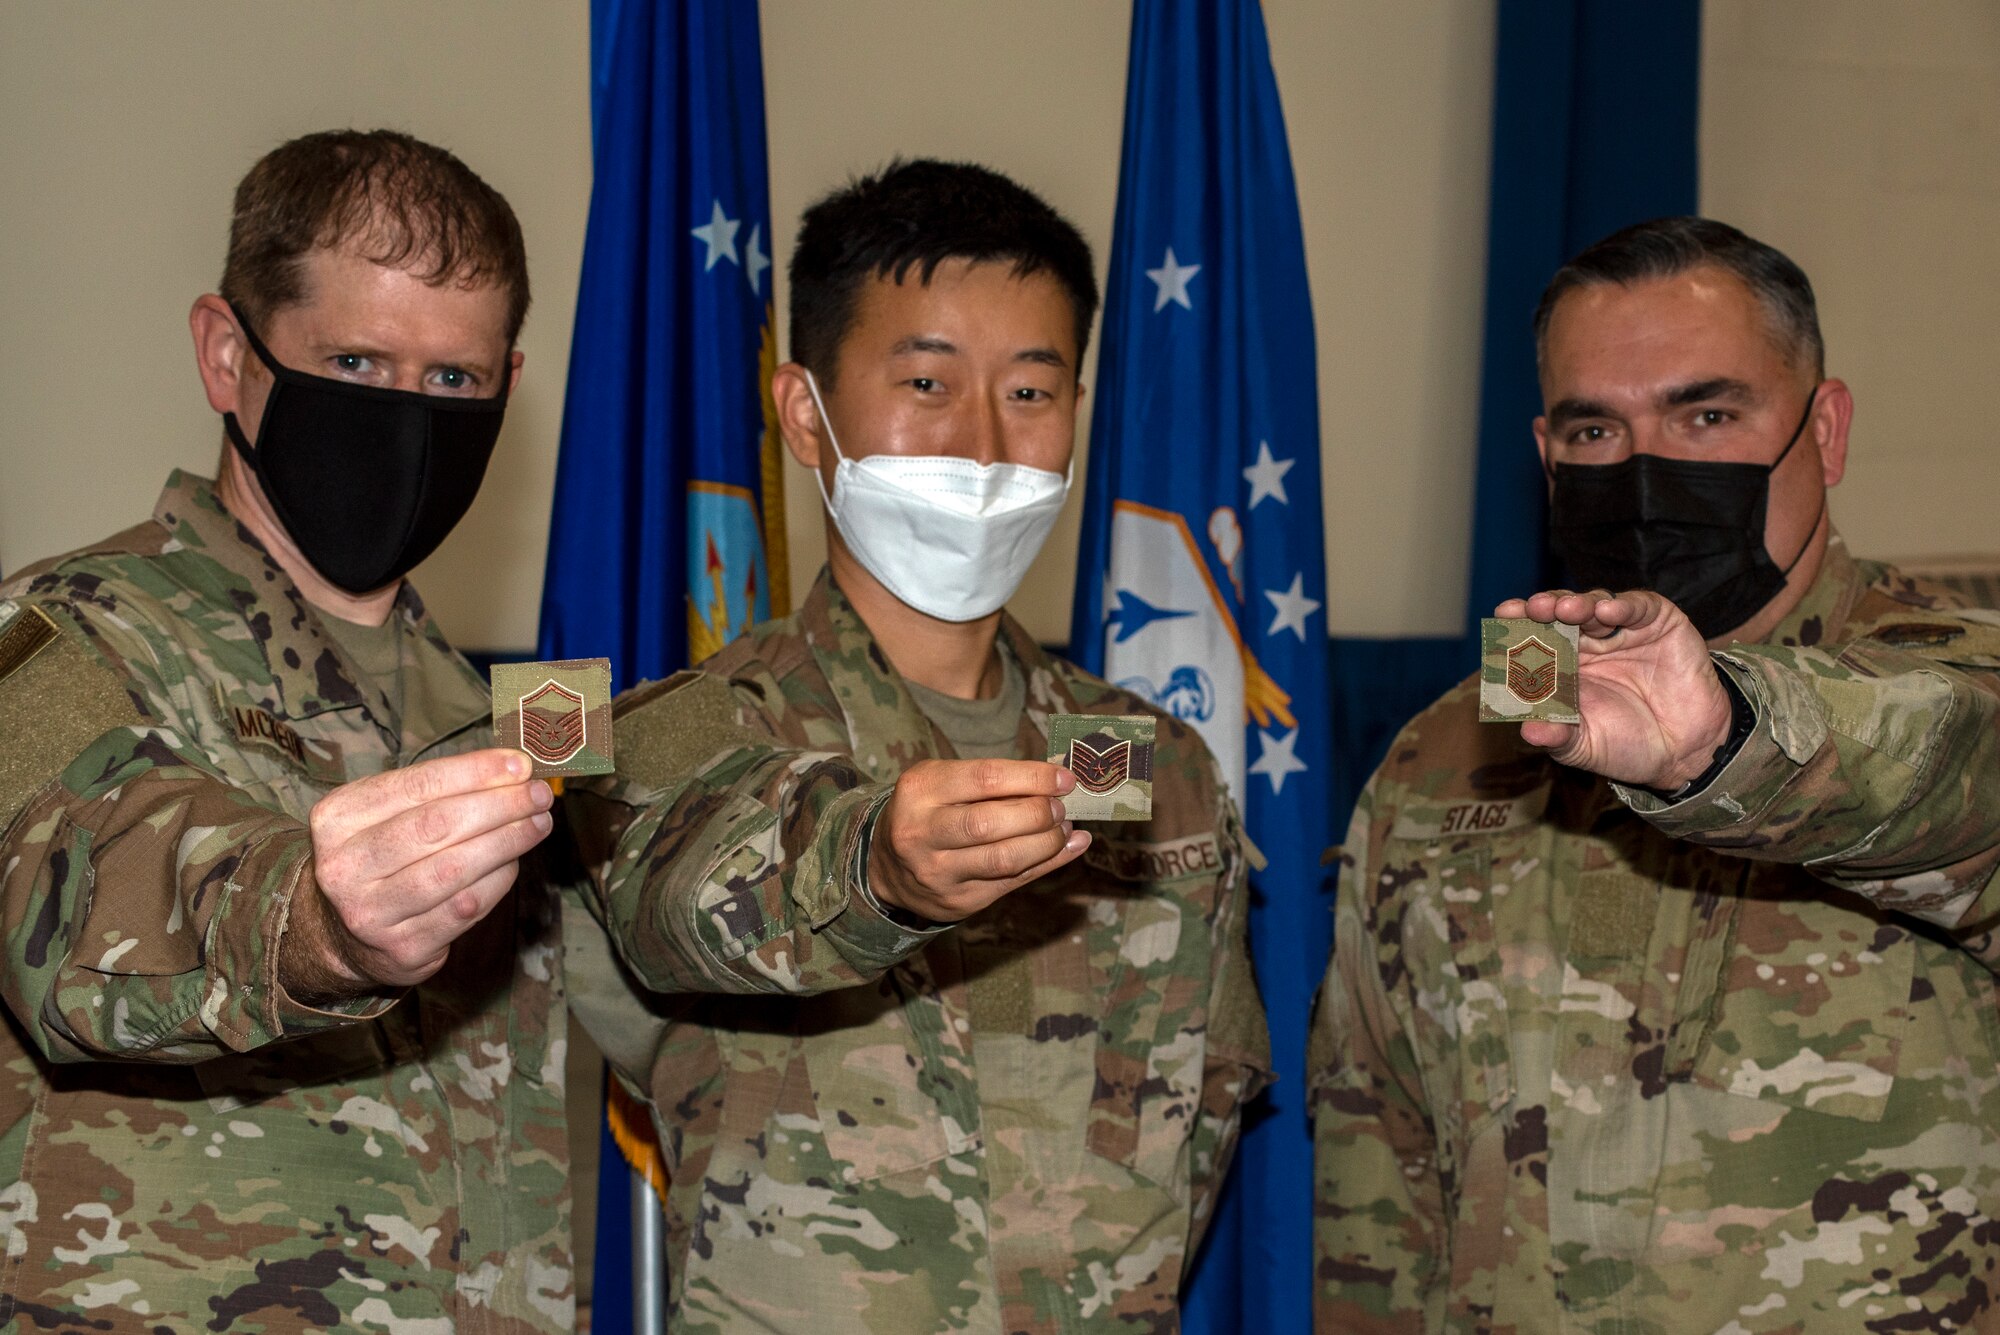 Three men in Air Force uniforms display their rank insignias.